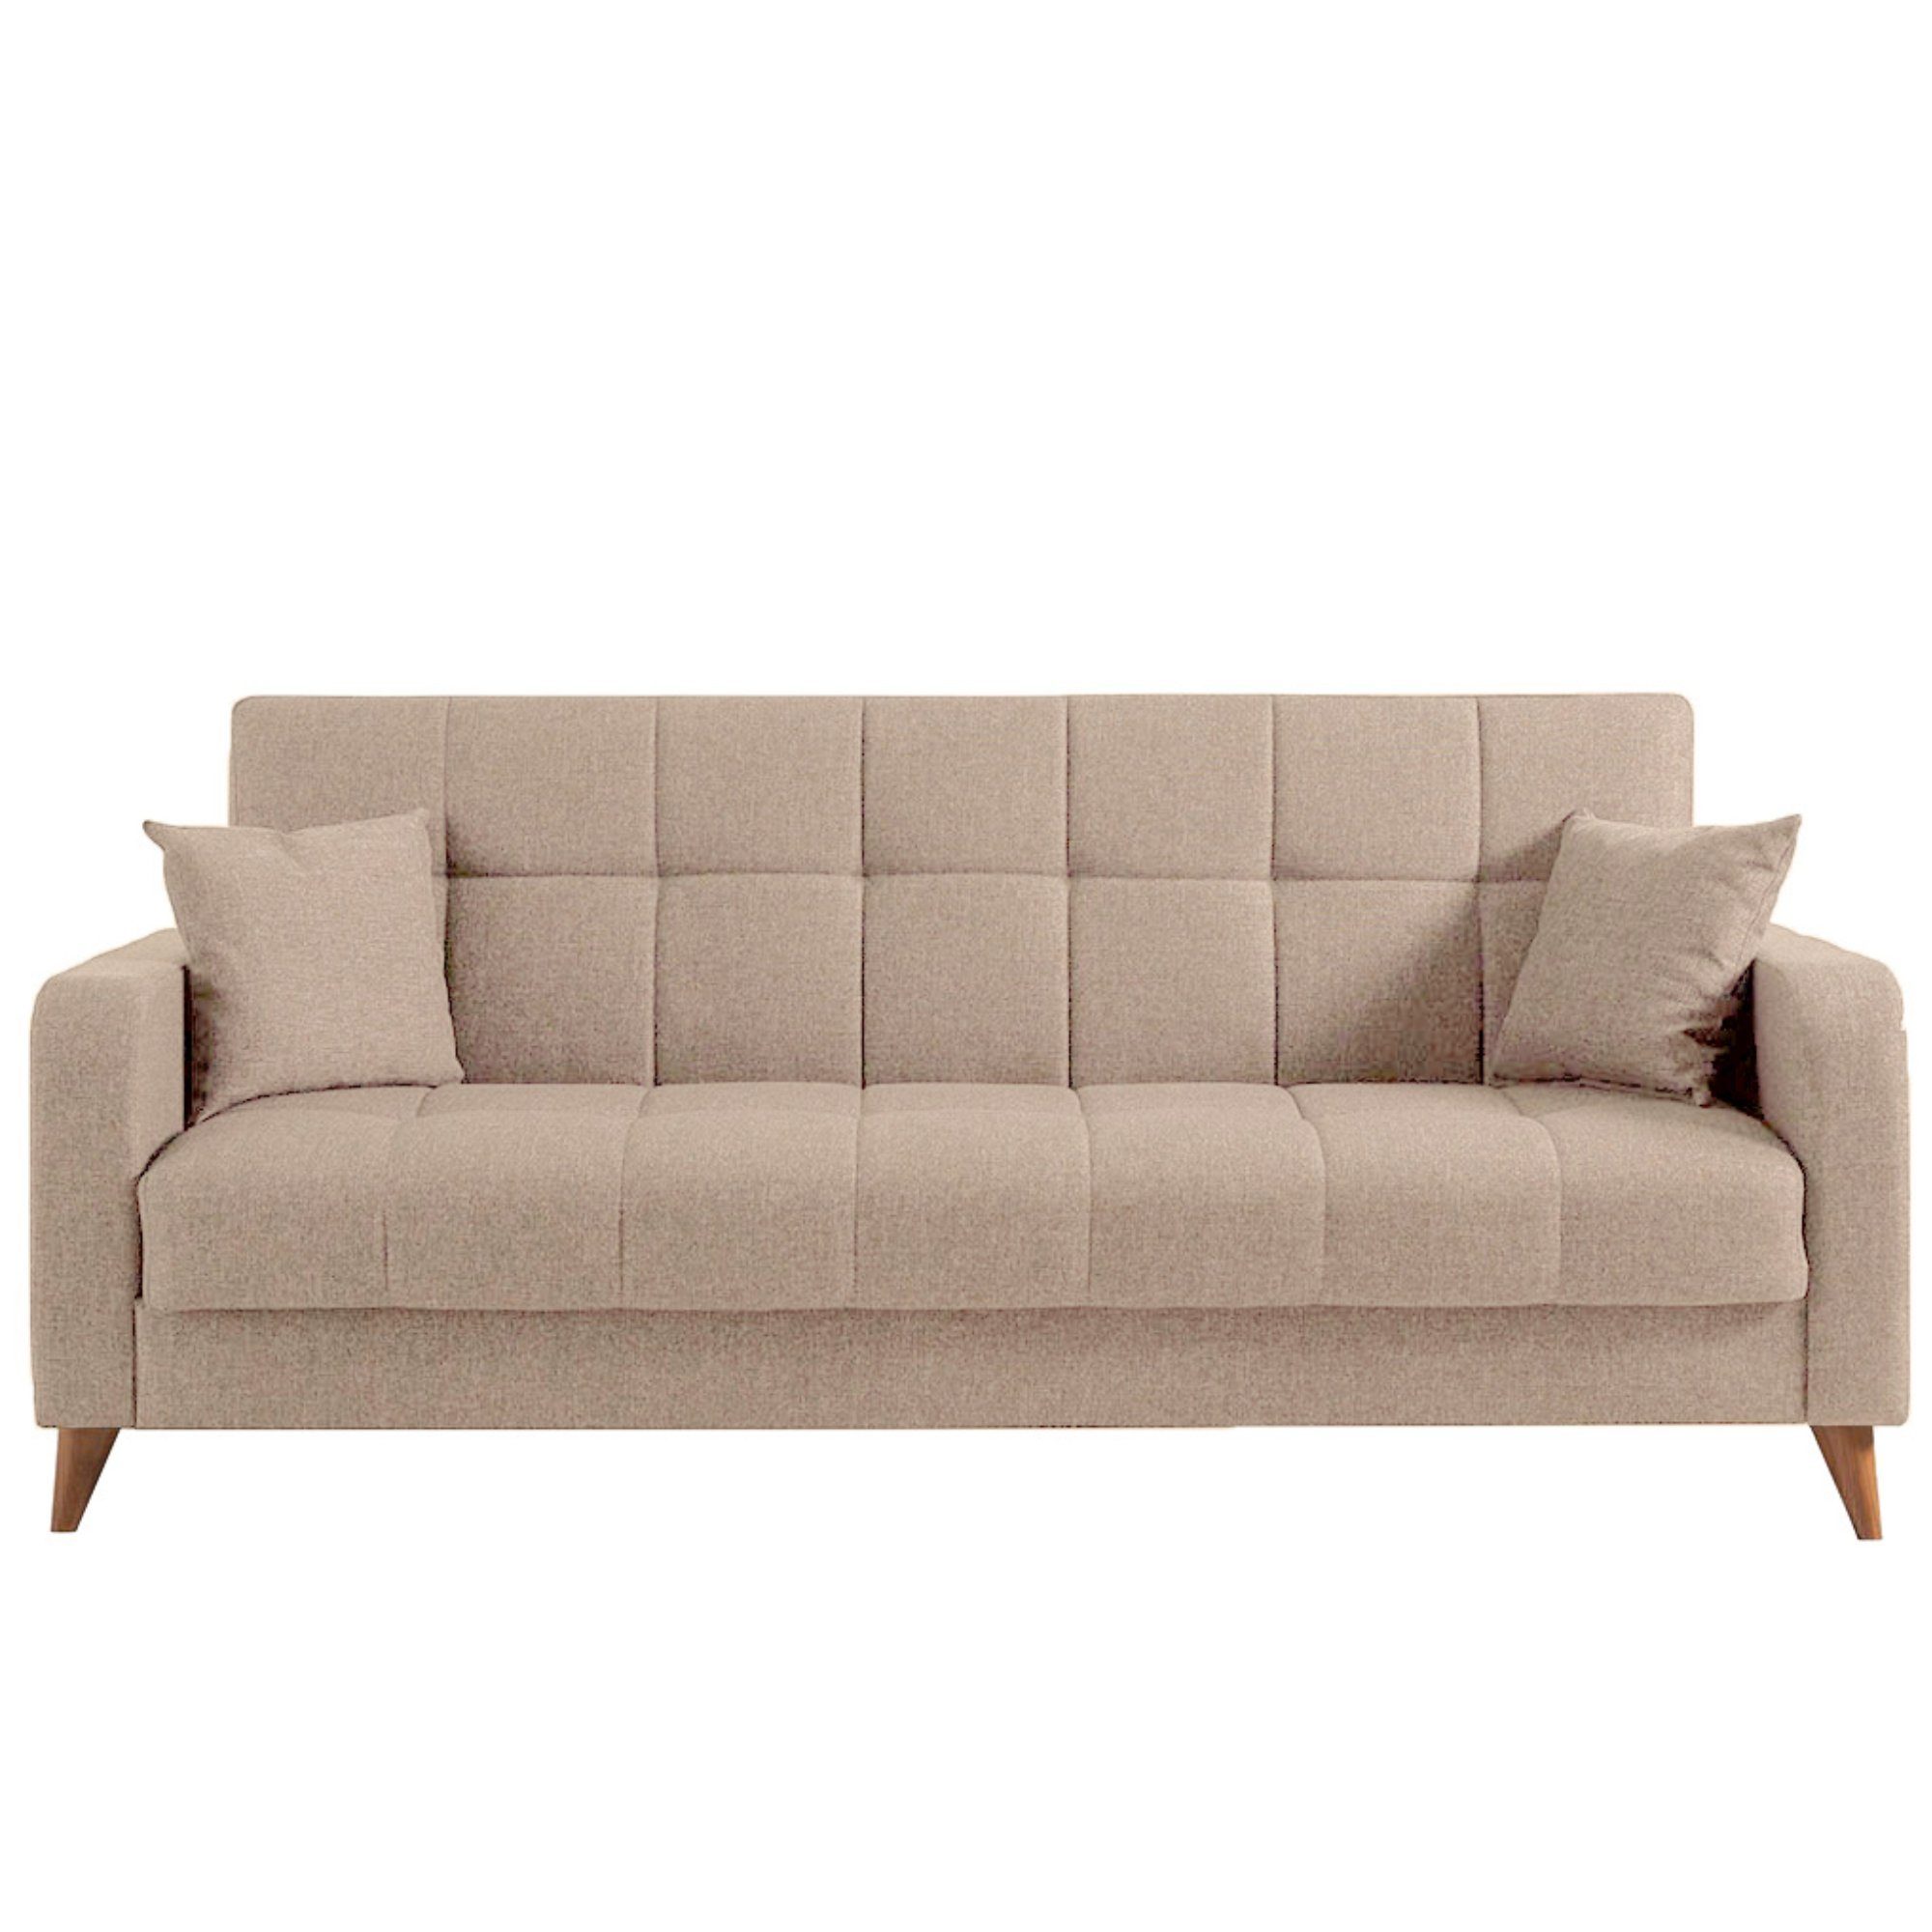 Gozos Sofa Gozos Bilbao 219 Polybaumwolle, Sitzer Beige x Series cm x 3 Sofa, Bettfunktion 90 98 Couch